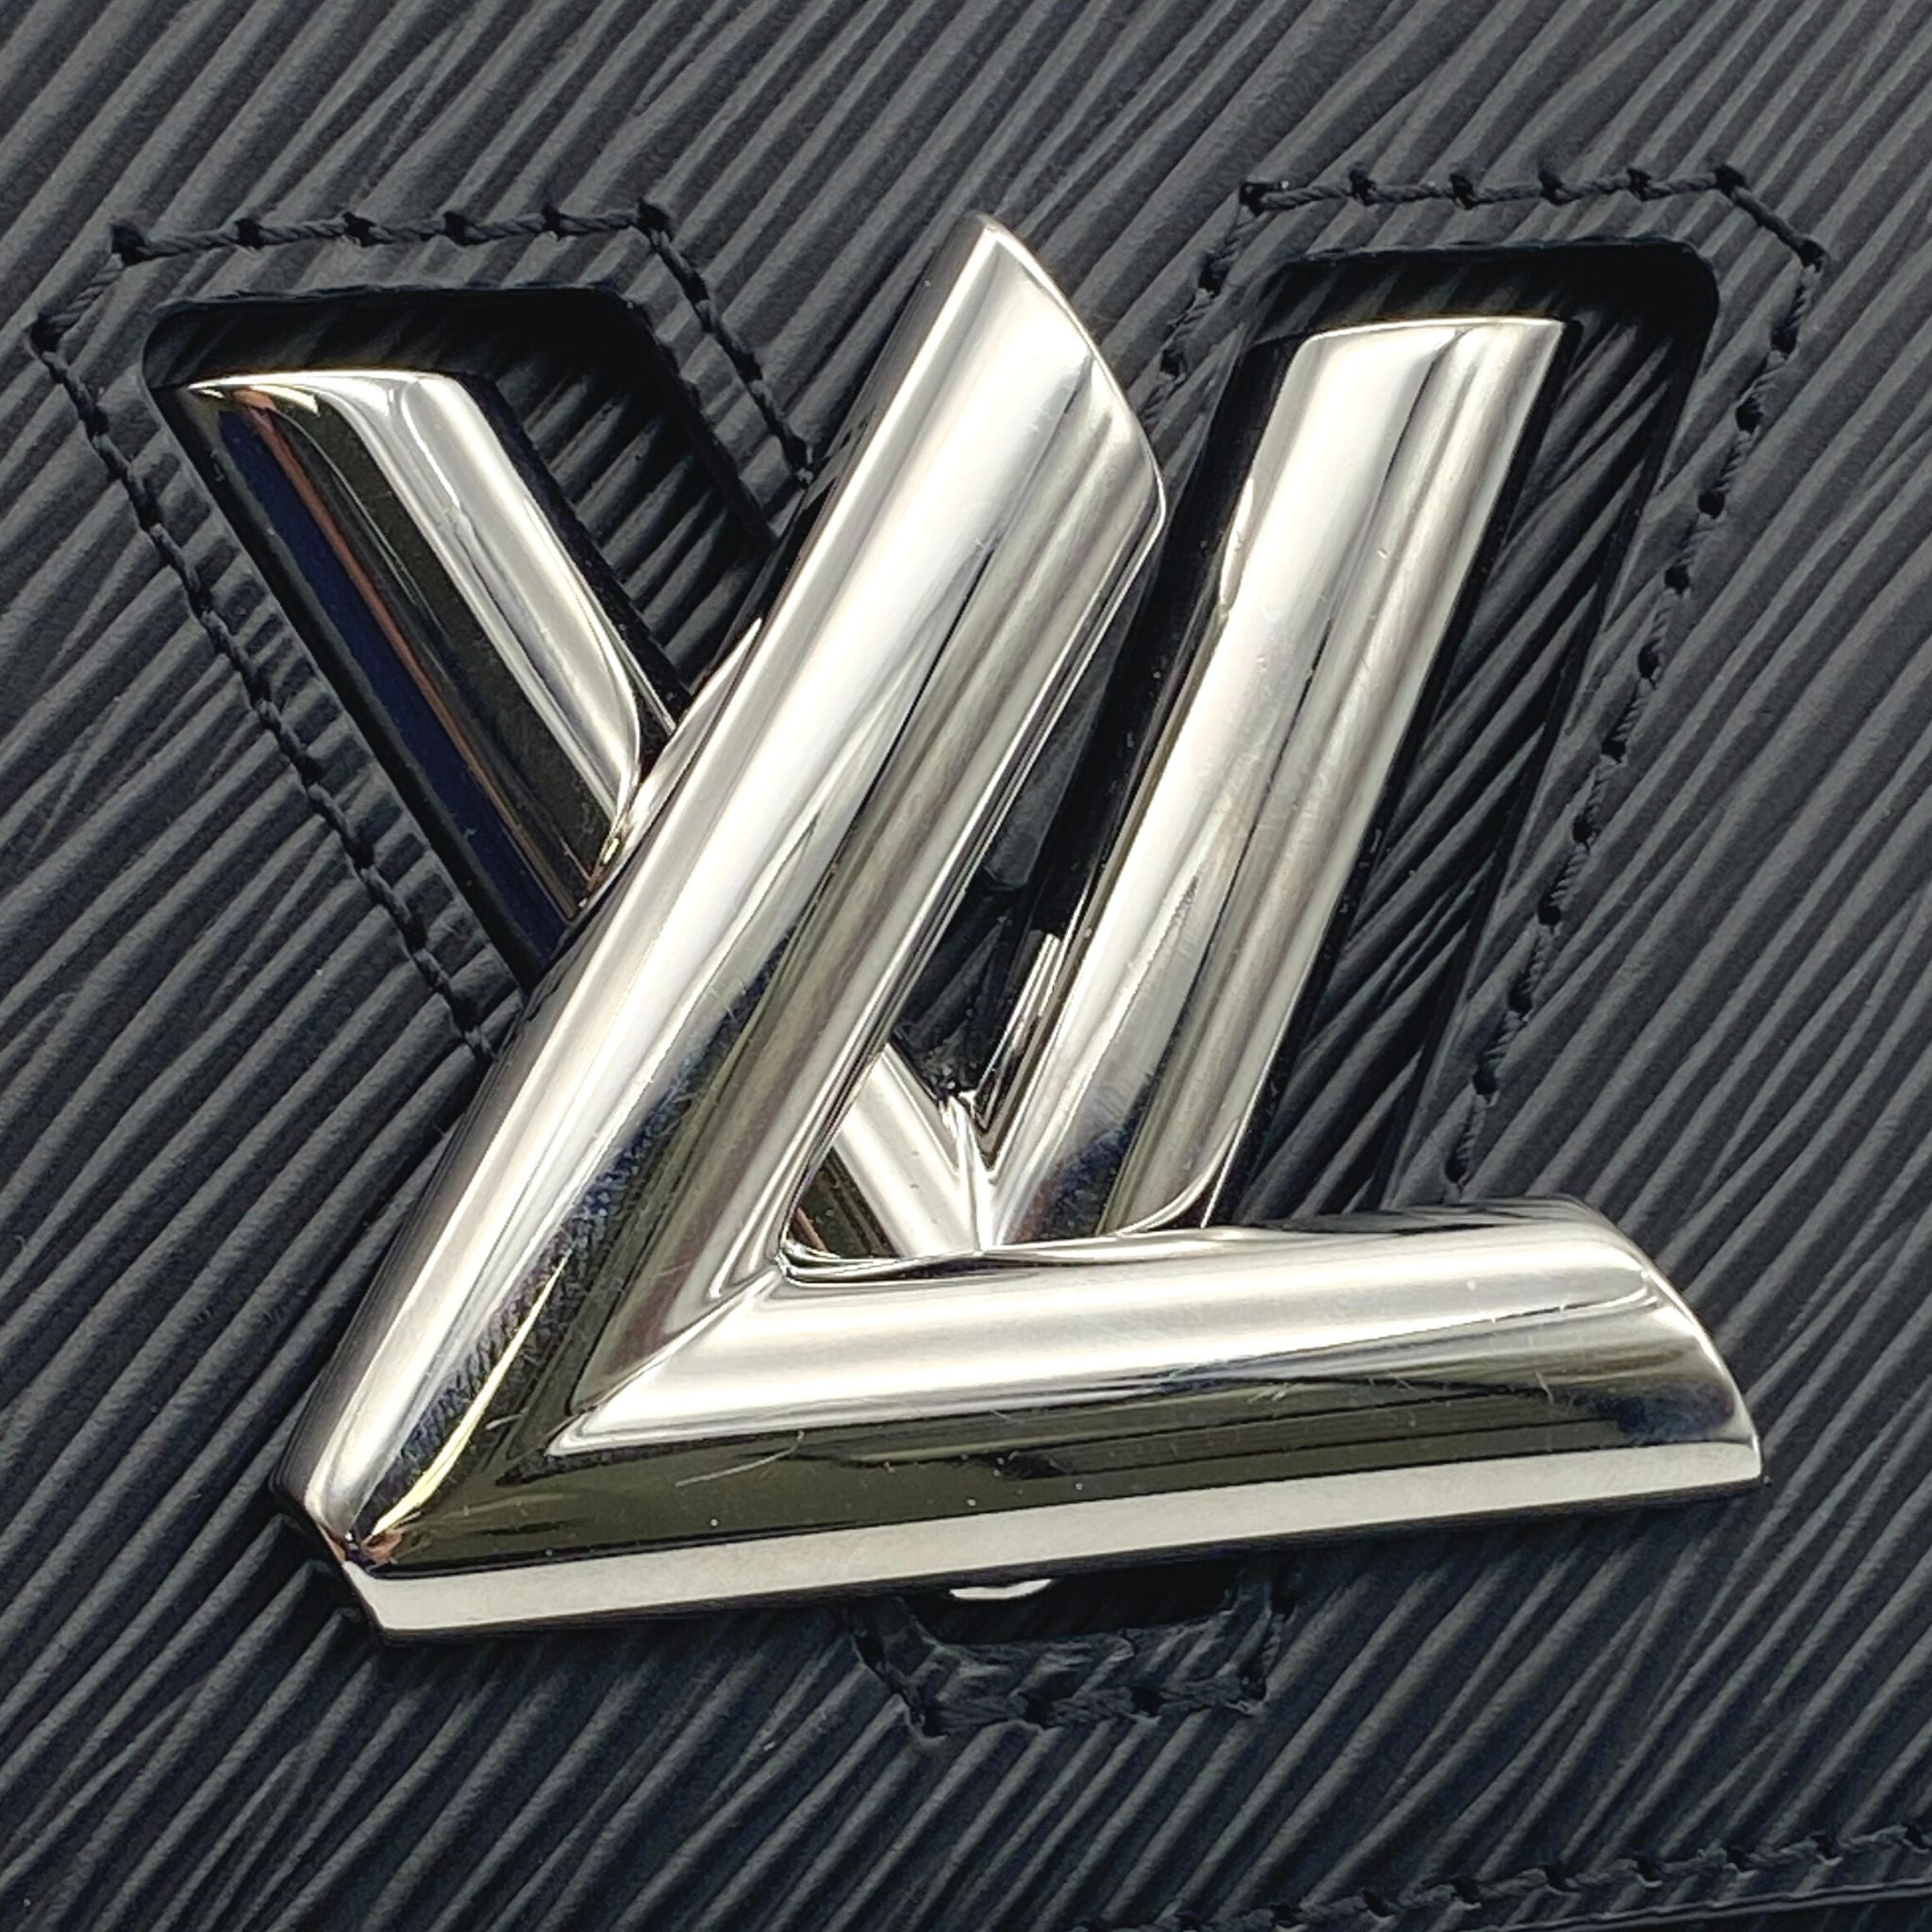 Louis Vuitton Black EPI Leather Twist PM Shoulder Bag – Mills Jewelers &  Loan